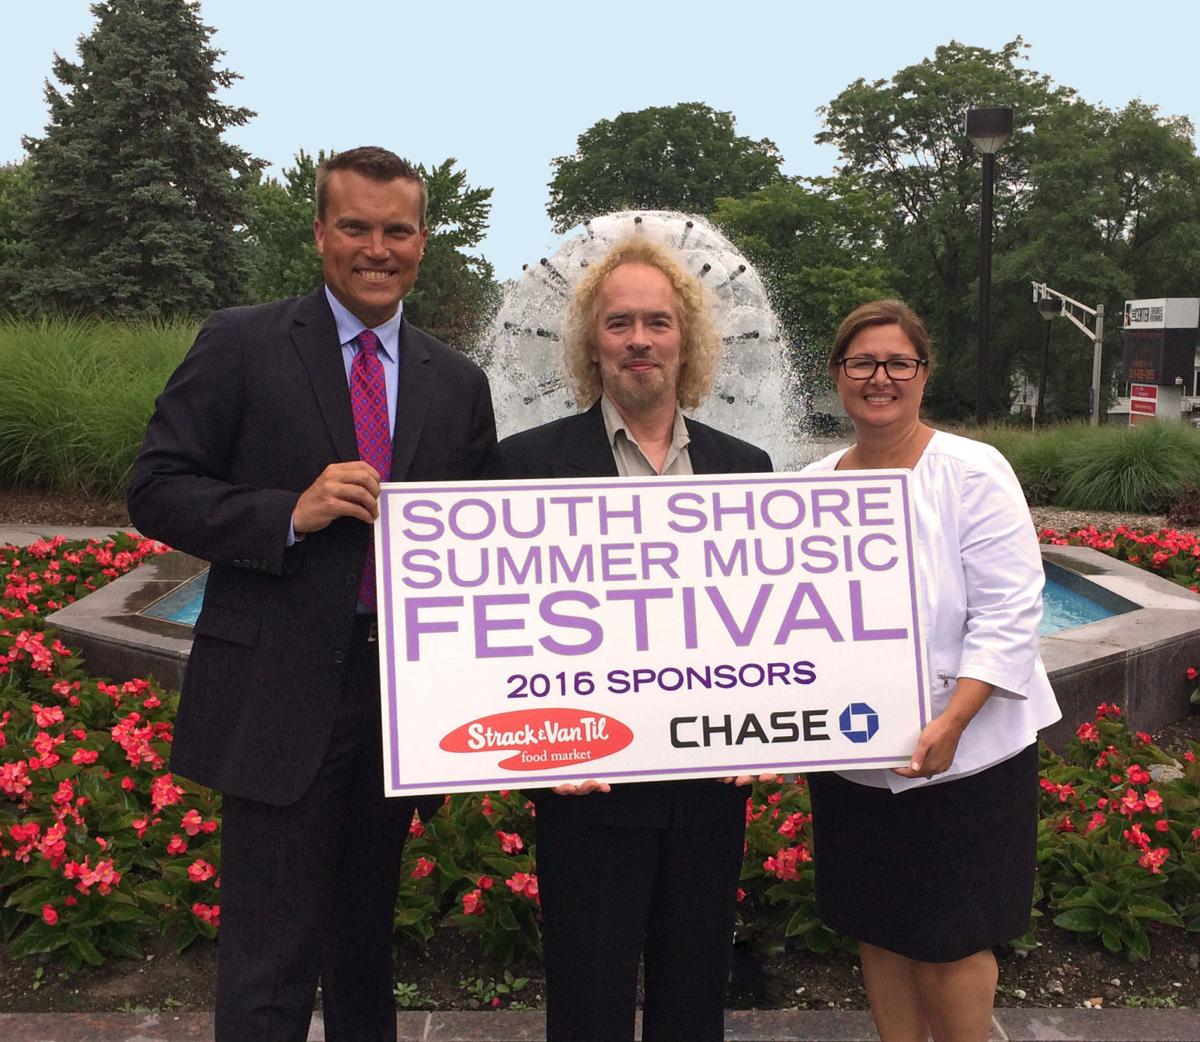 South Shore Summer Music Festival kicks off July 23